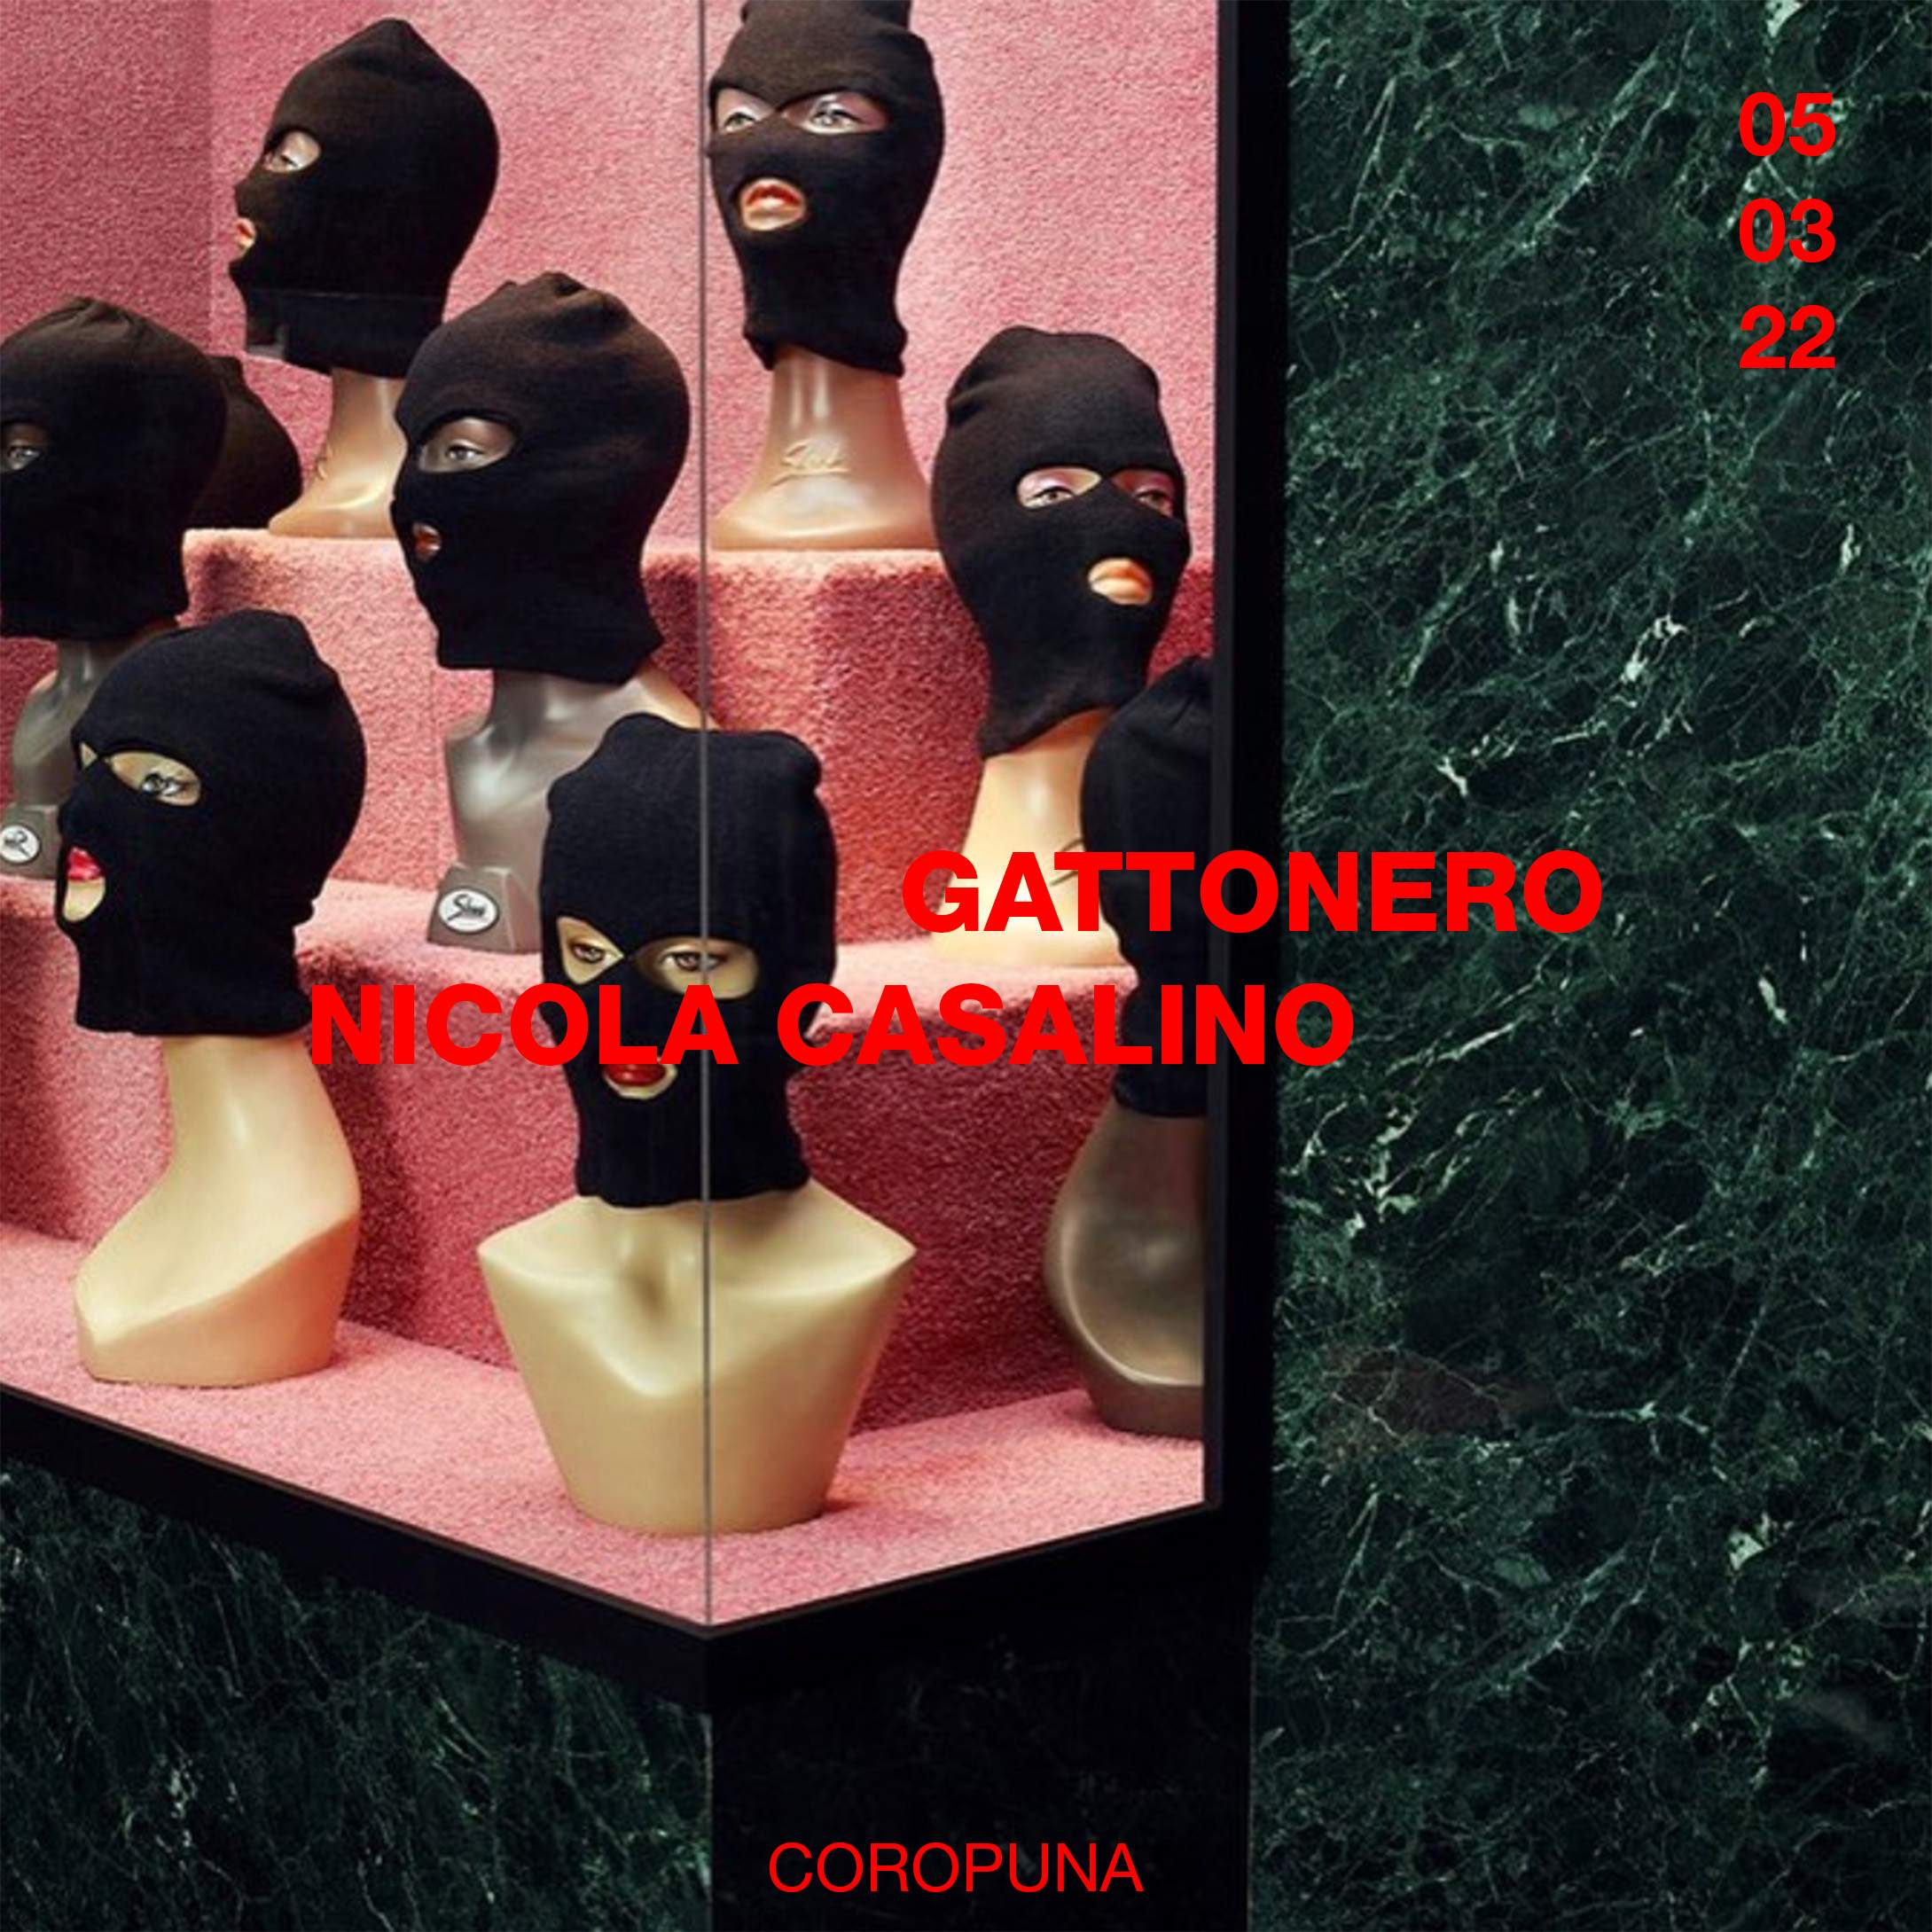 Gattonero + Nicola Casalino - フライヤー表